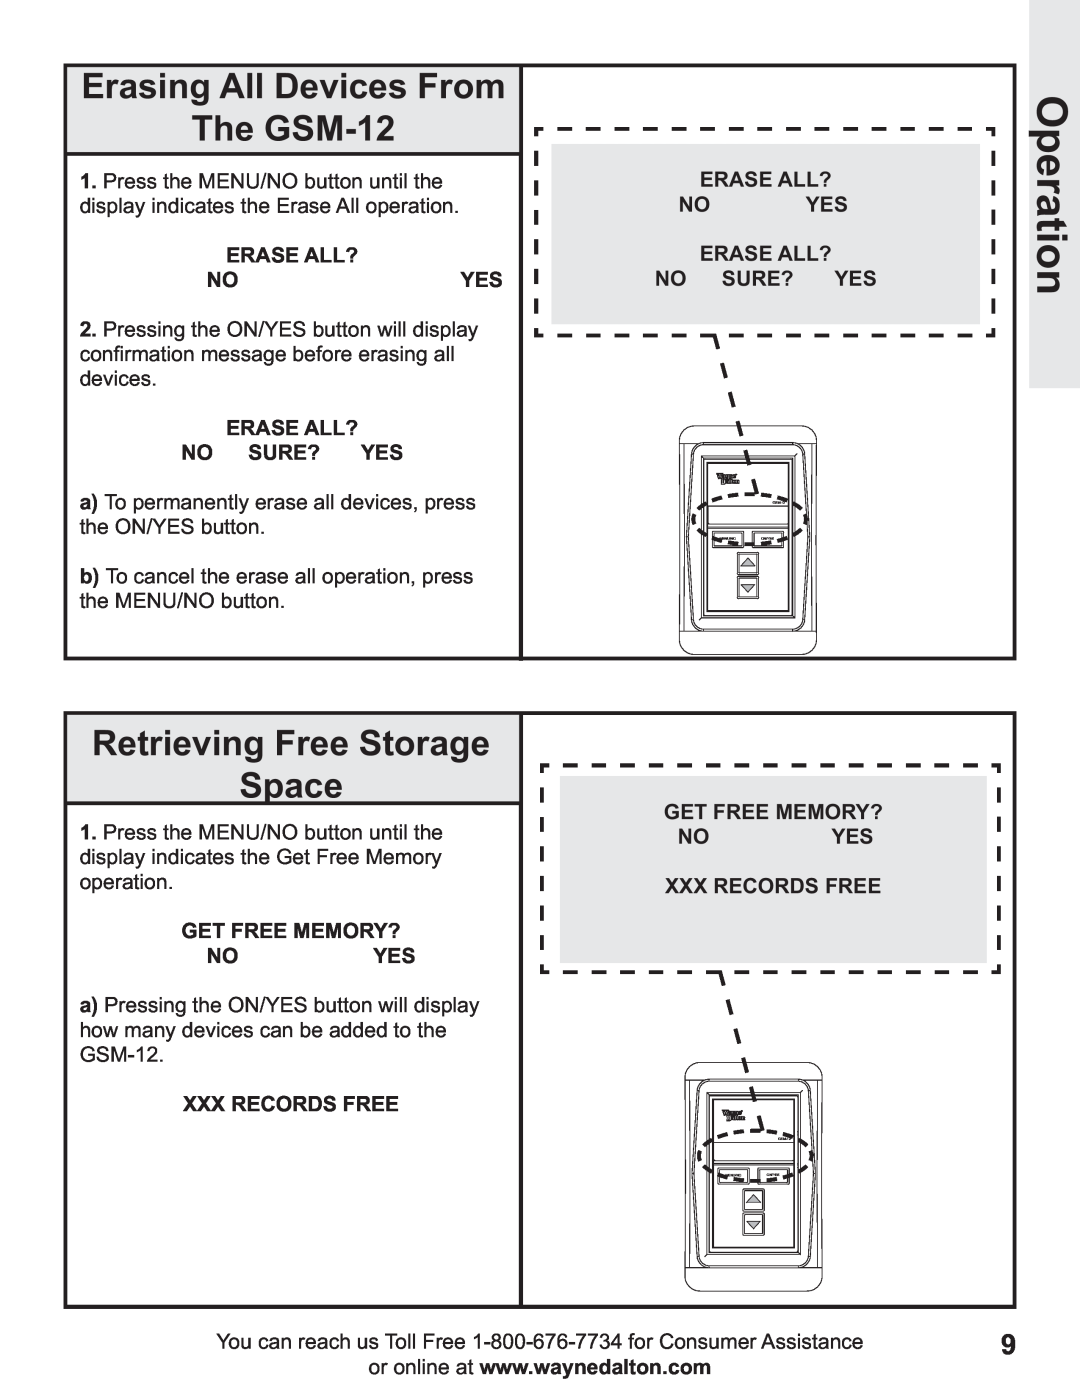 Wayne-Dalton Erasing All Devices From The GSM-12, Retrieving Free Storage Space, Erase All? Noyes, Xxxrecords Free 